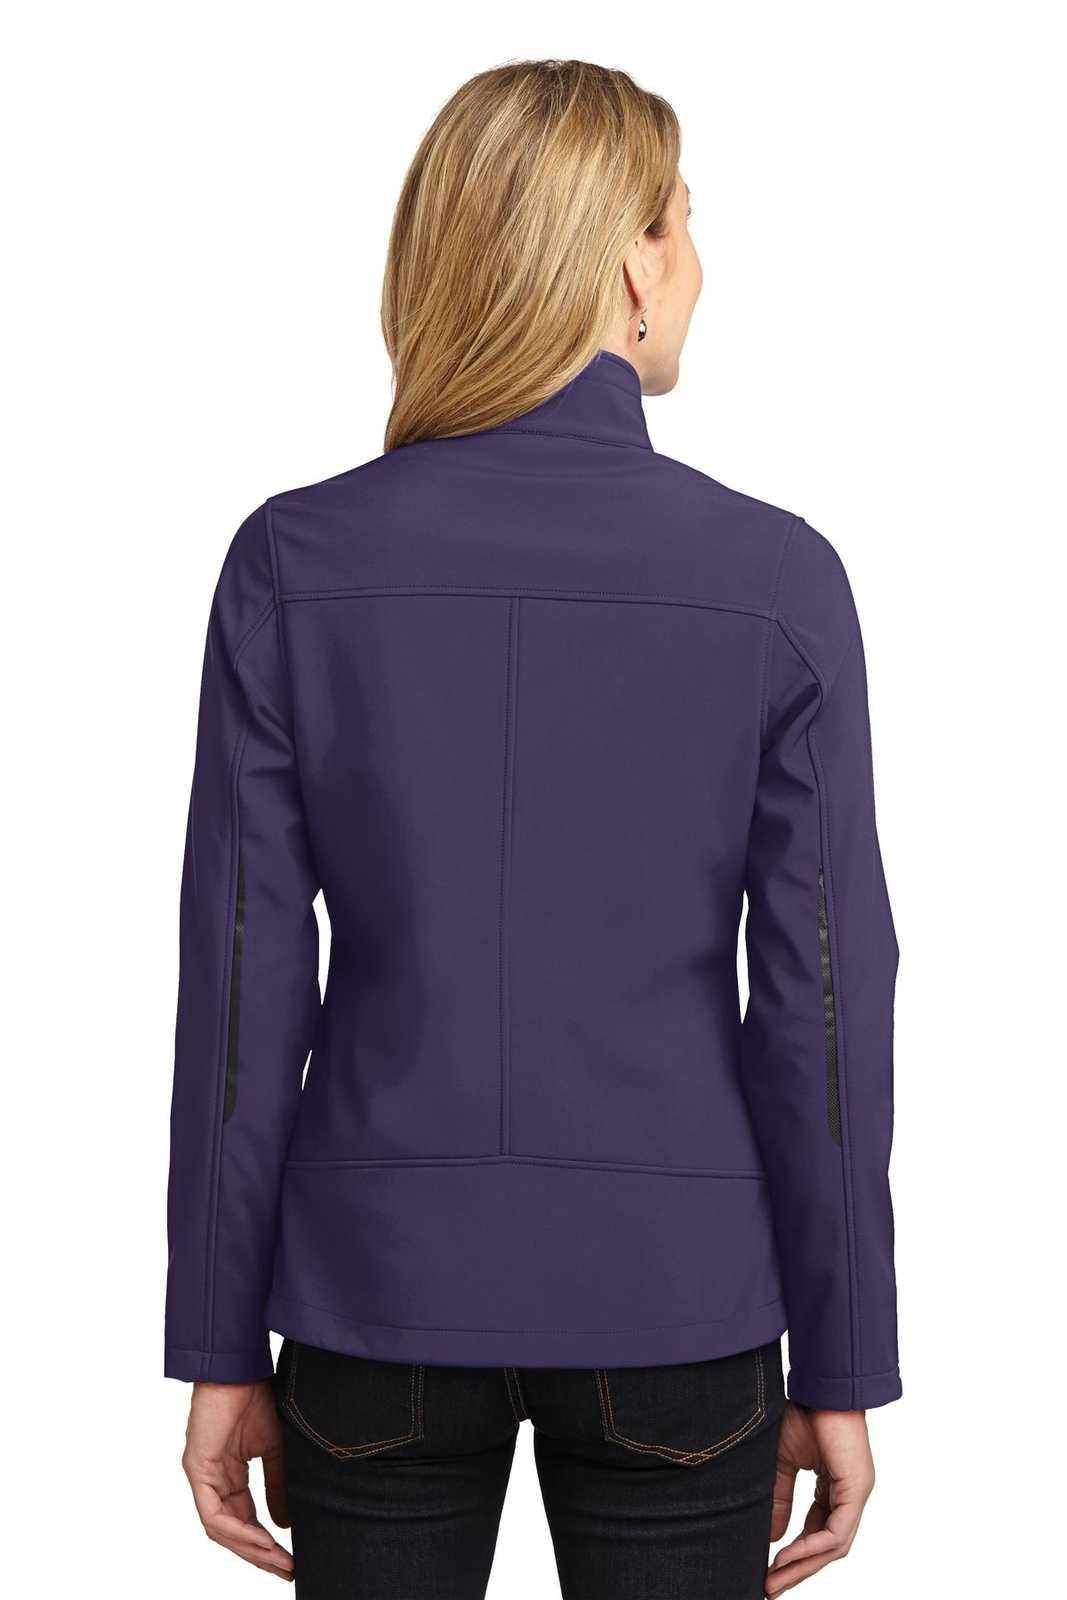 Port Authority L324 Ladies Welded Soft Shell Jacket - Posh Purple - HIT a Double - 1